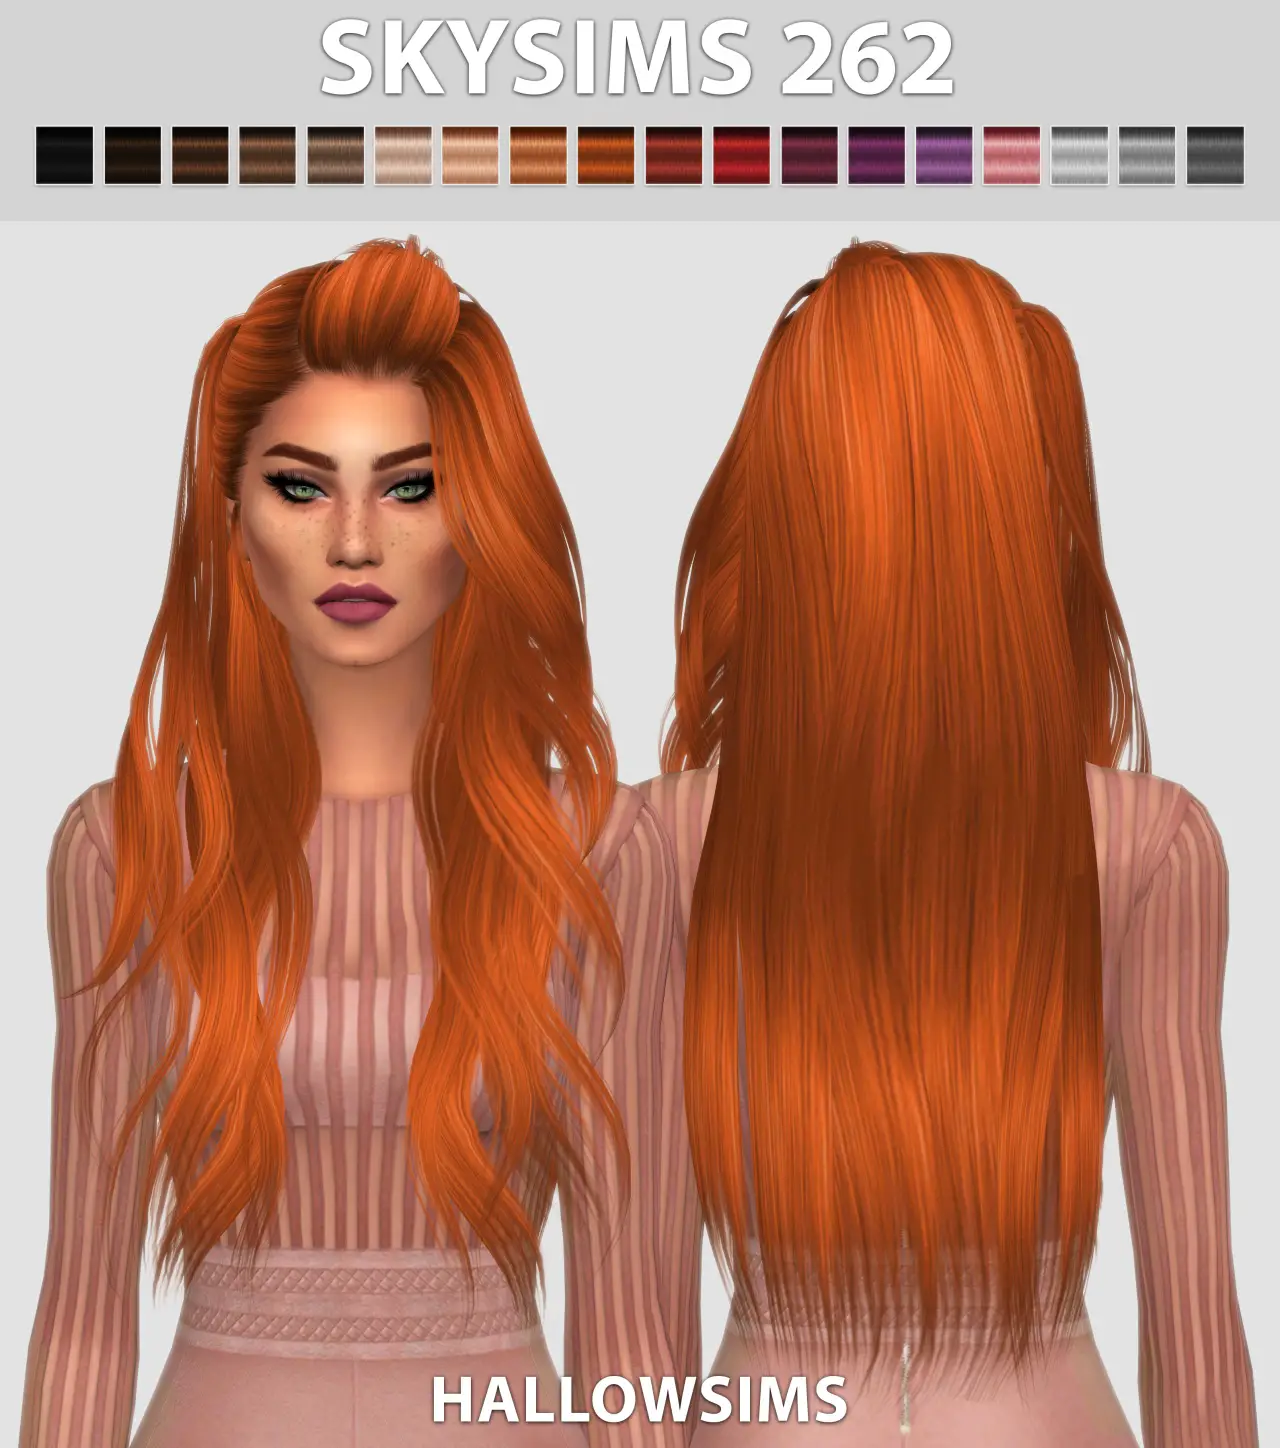 Sims 4 Hairs Hallow Sims Skysims 262 Hair Retextured